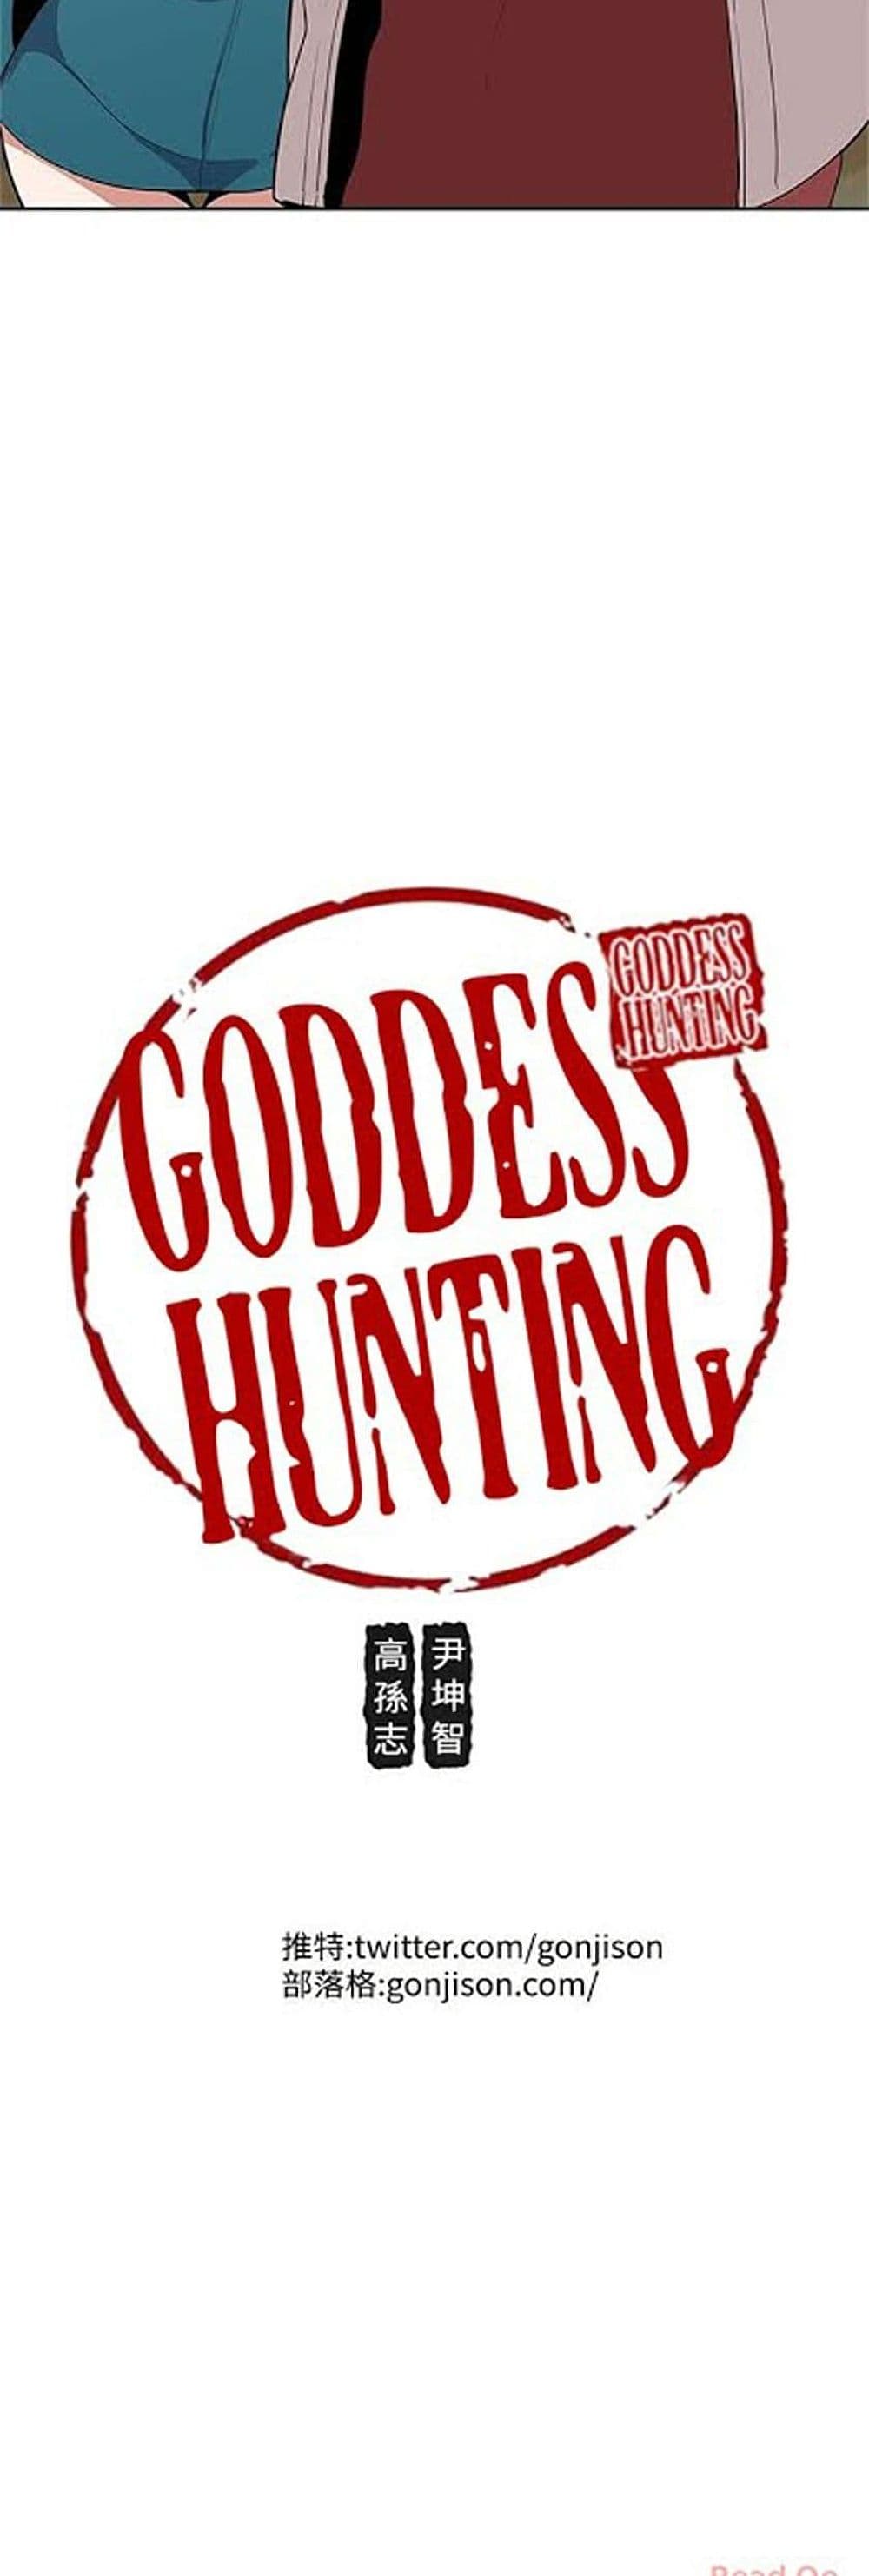 Goddess Hunting 28